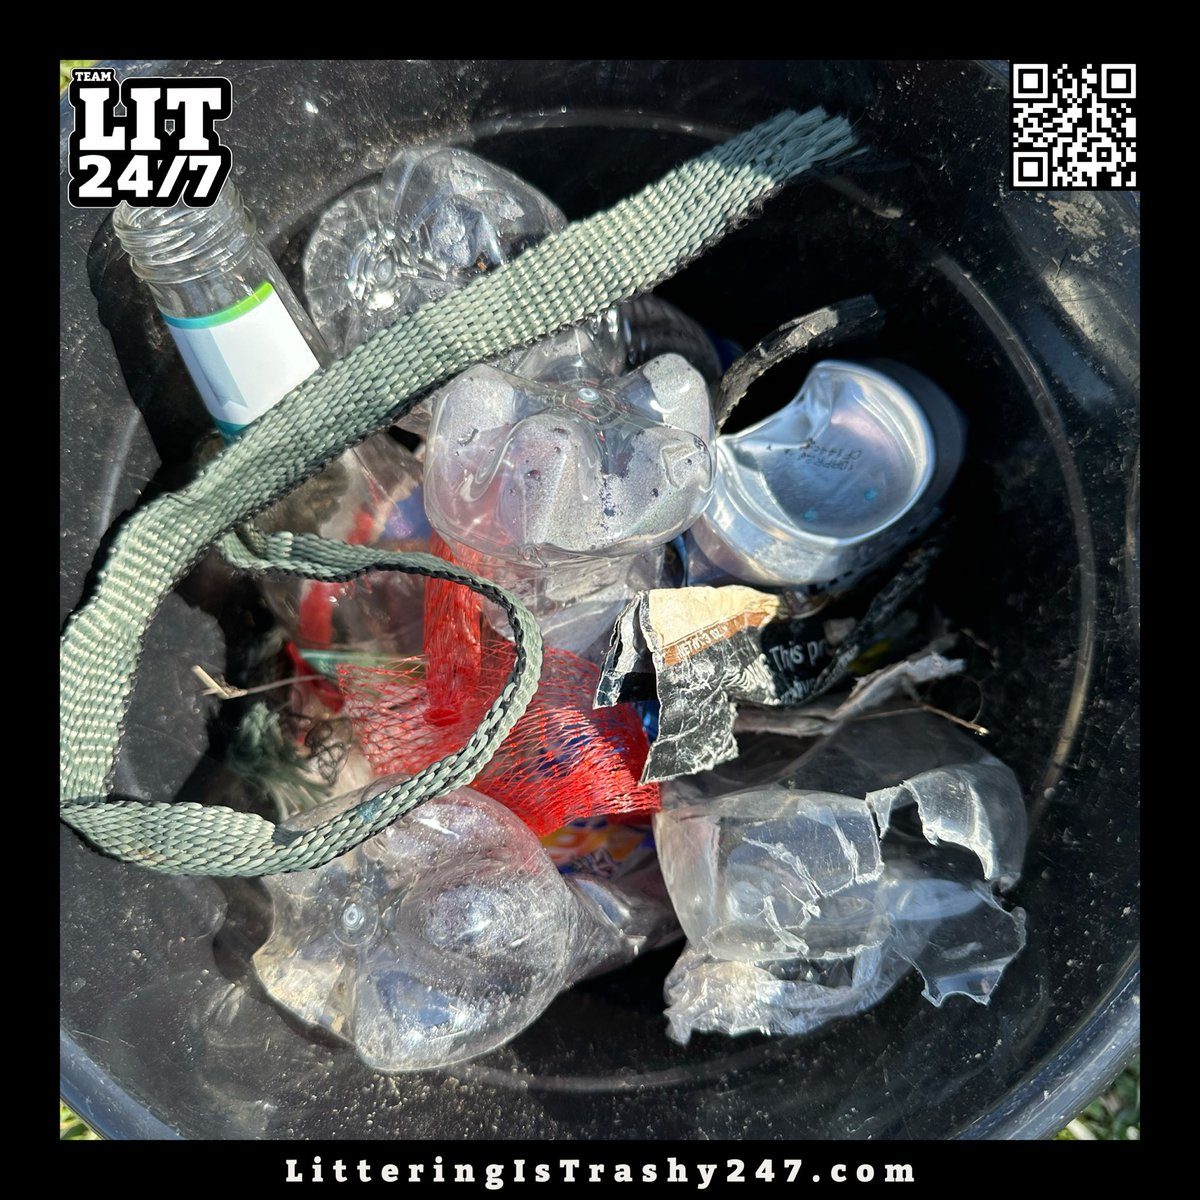 Biking and litter picking.
🚯🌾🚴🏽🚴🏽‍♀️

#LitteringIsTrashy
#KeepingActive
#LitterCleanup 
#MentalHealth
#PlasticWaste
#StopLittering
#TeamLIT247
#LitterPicking
#Community
#Littering
#Litter